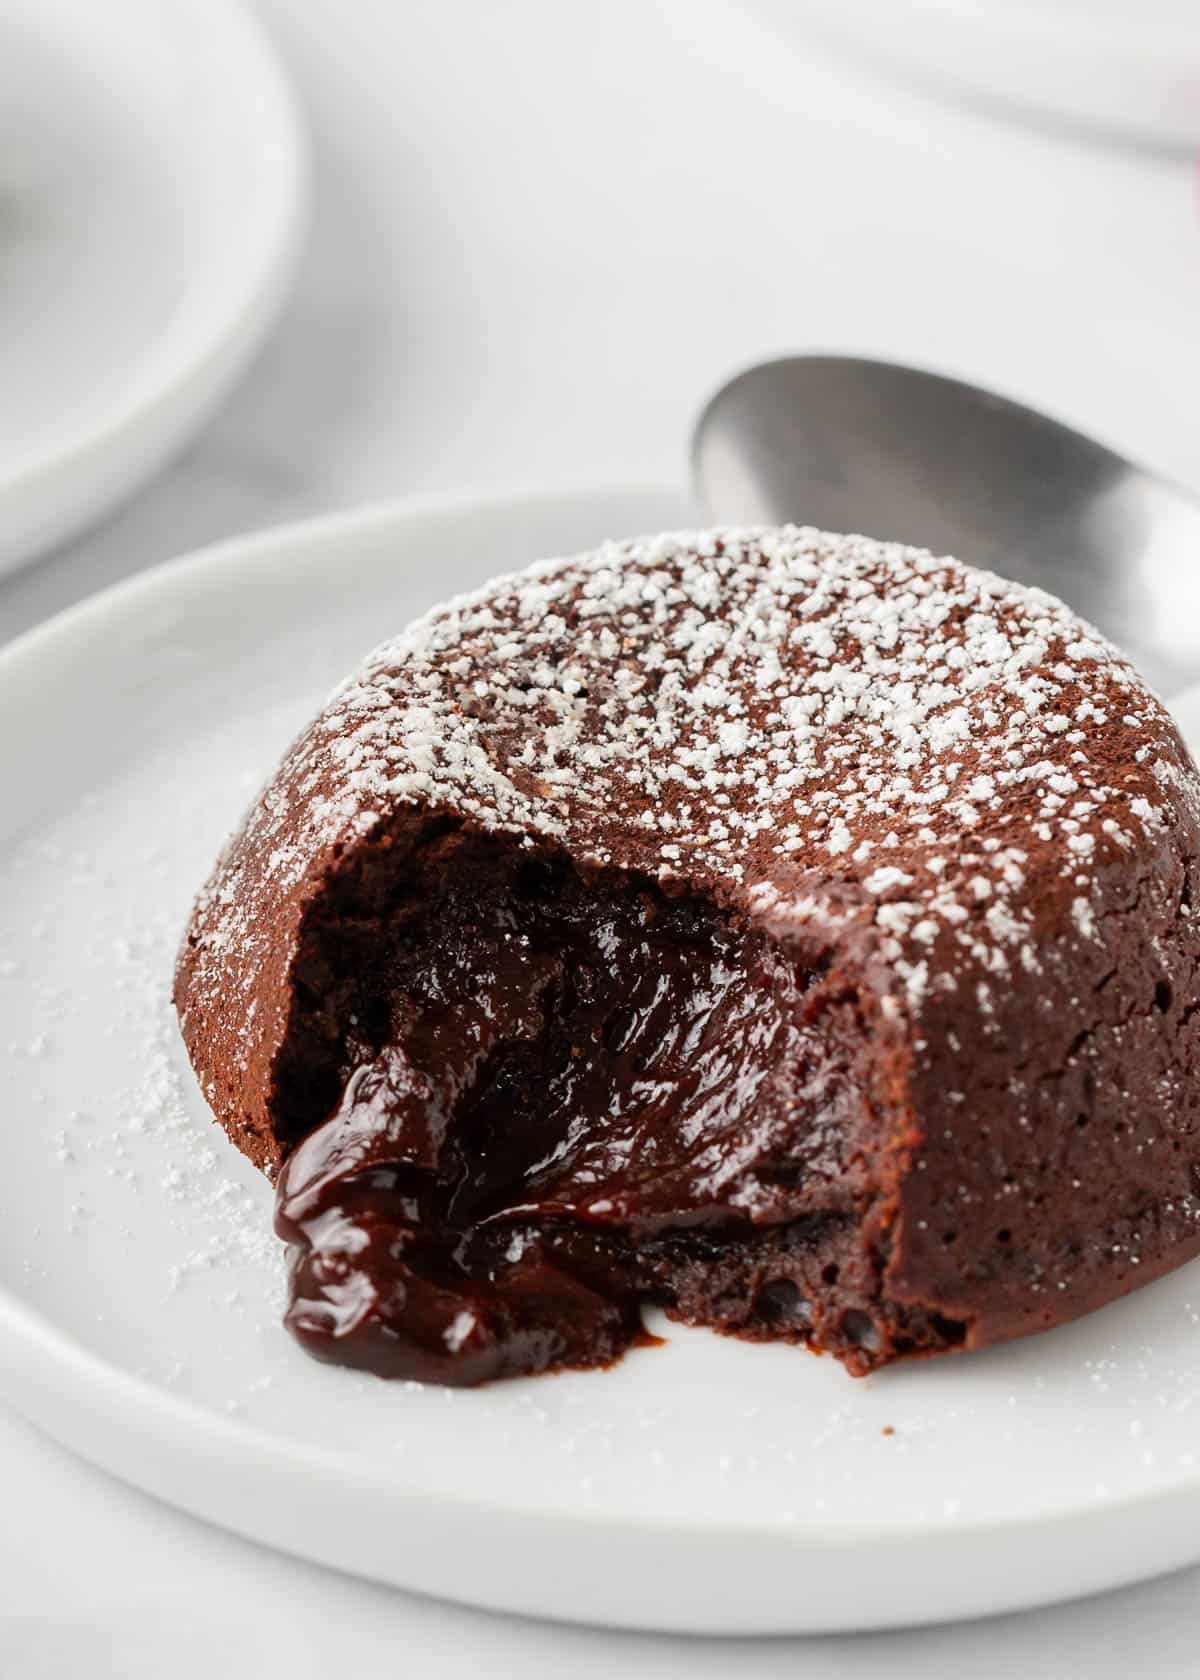 Chocolate lava cake on a white plate.